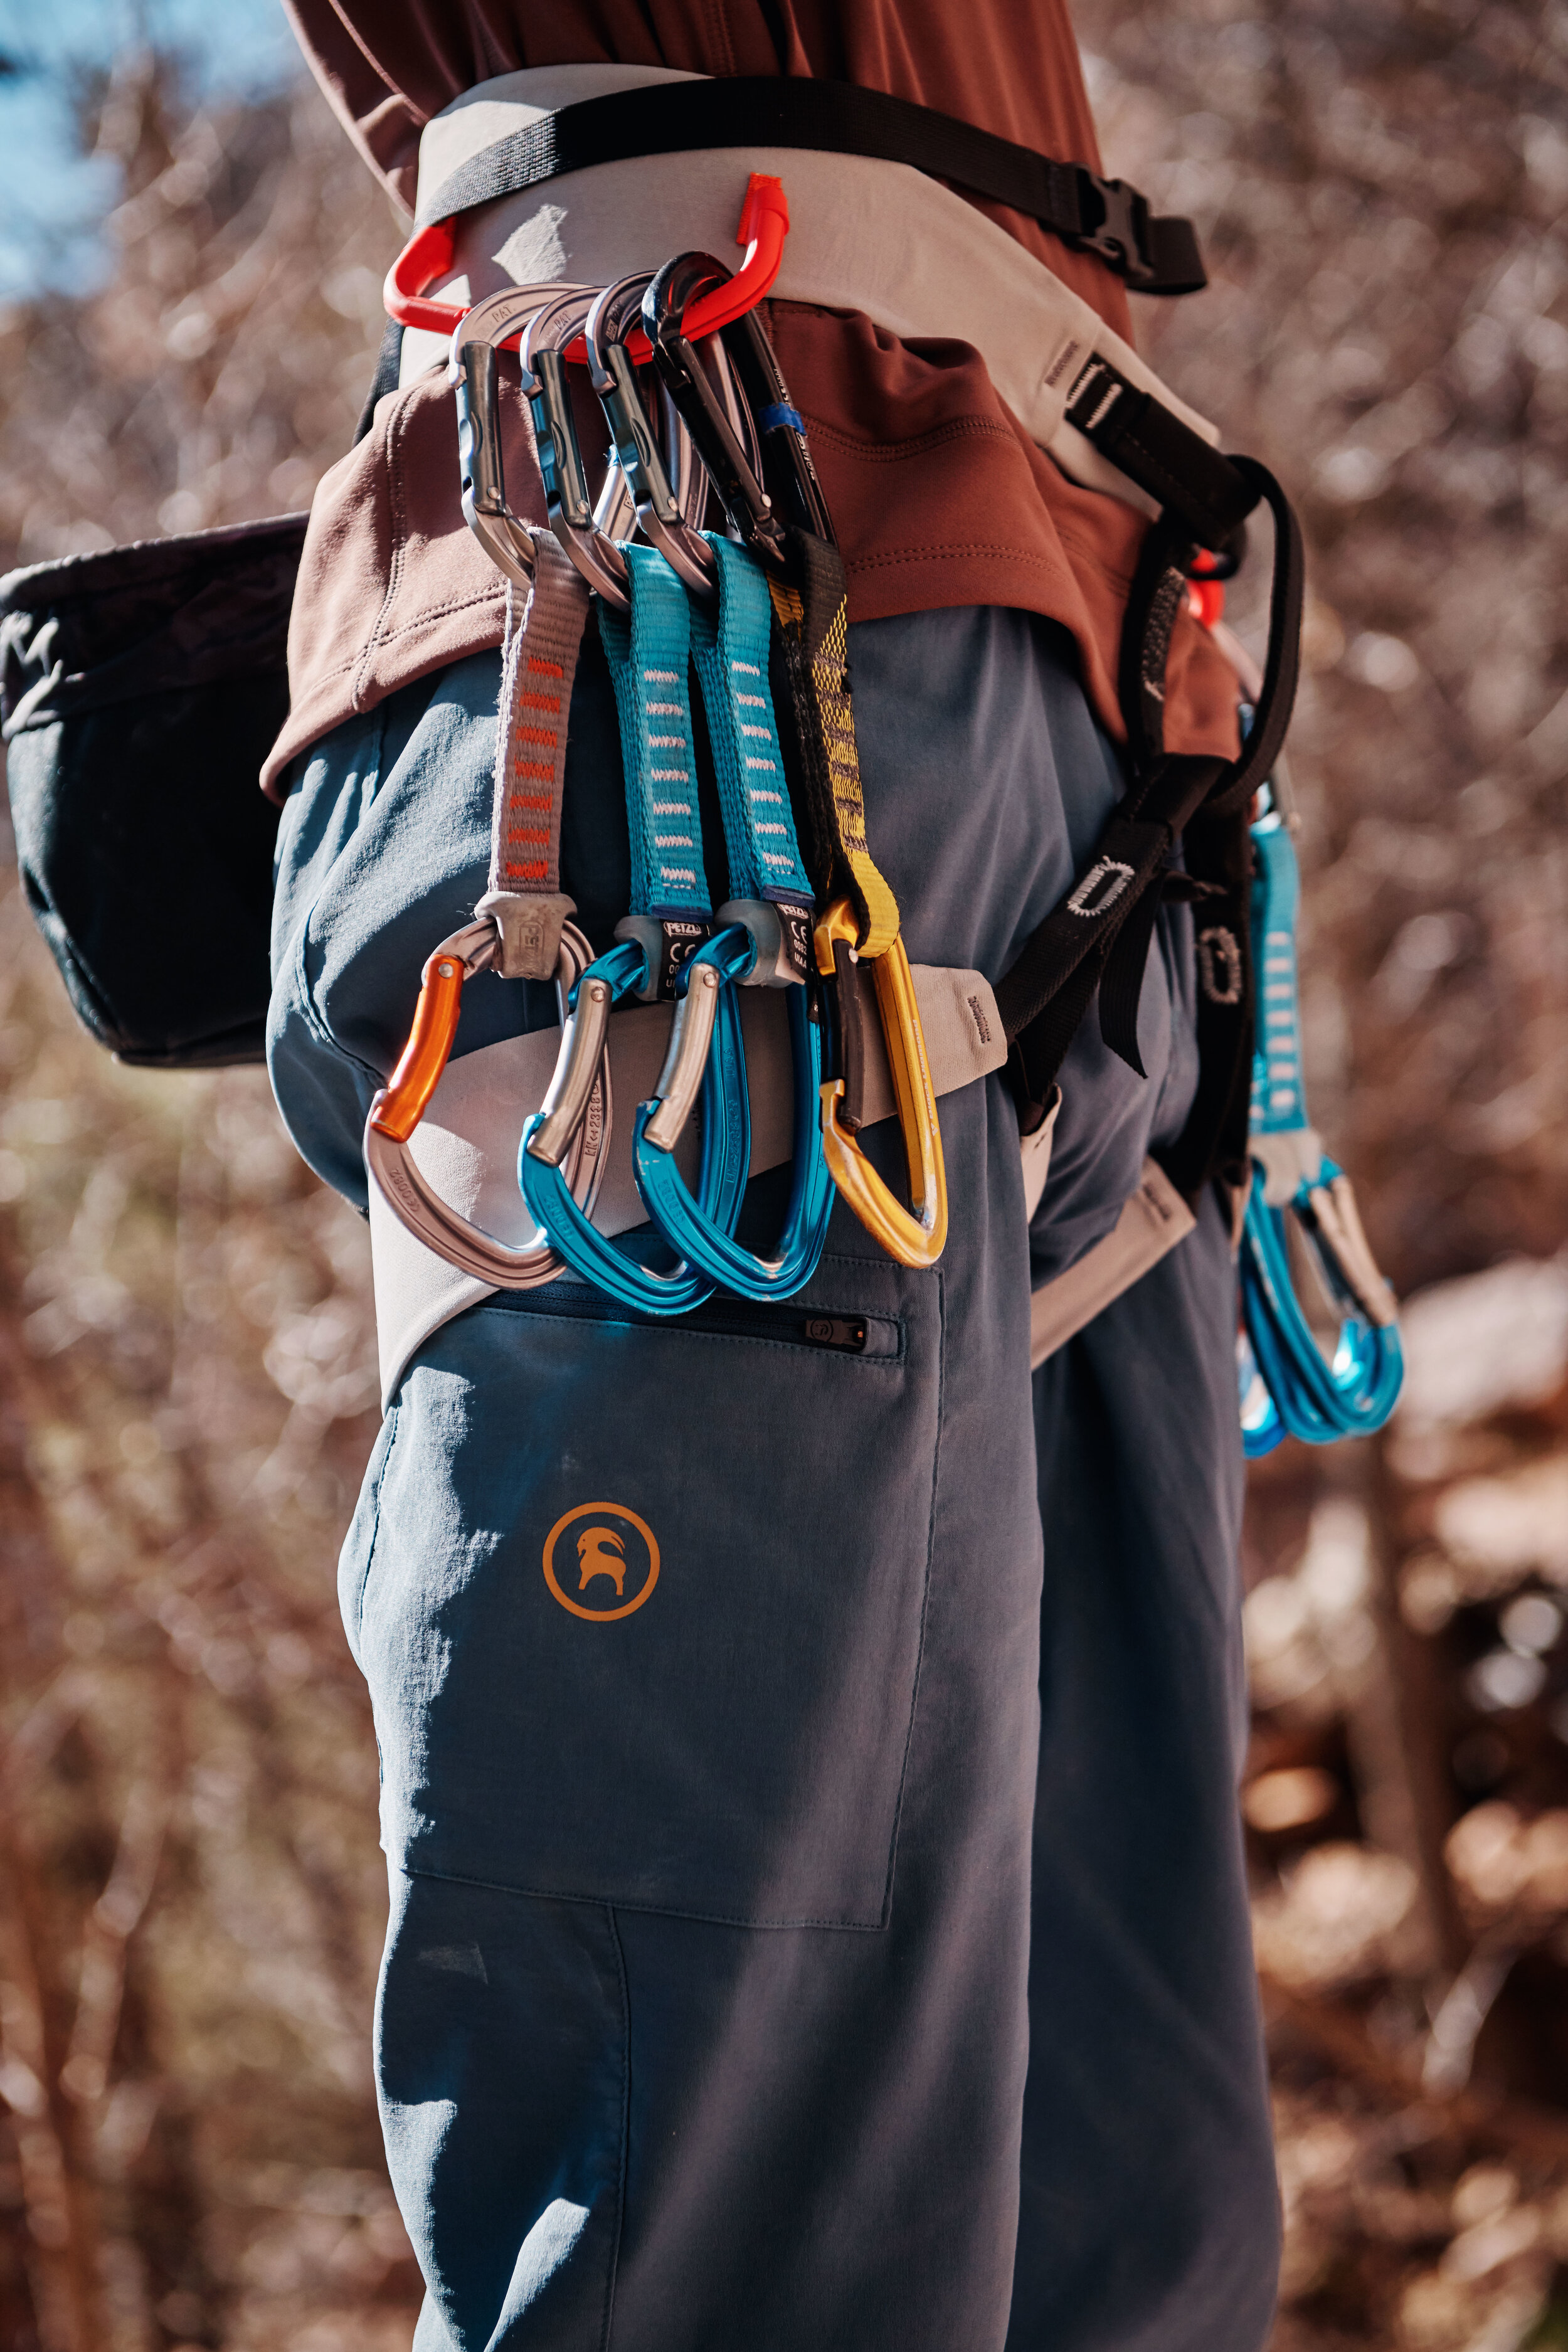   Backcountry Gear &amp; Apparel SS ’20    Pursuits:  Mountain Biking, Rock Climbing, Hiking, and Camping   Location:  Sedona, AZ   Producer:  Tyler Arrivillaga   Photographer:  Jordan Haggard 